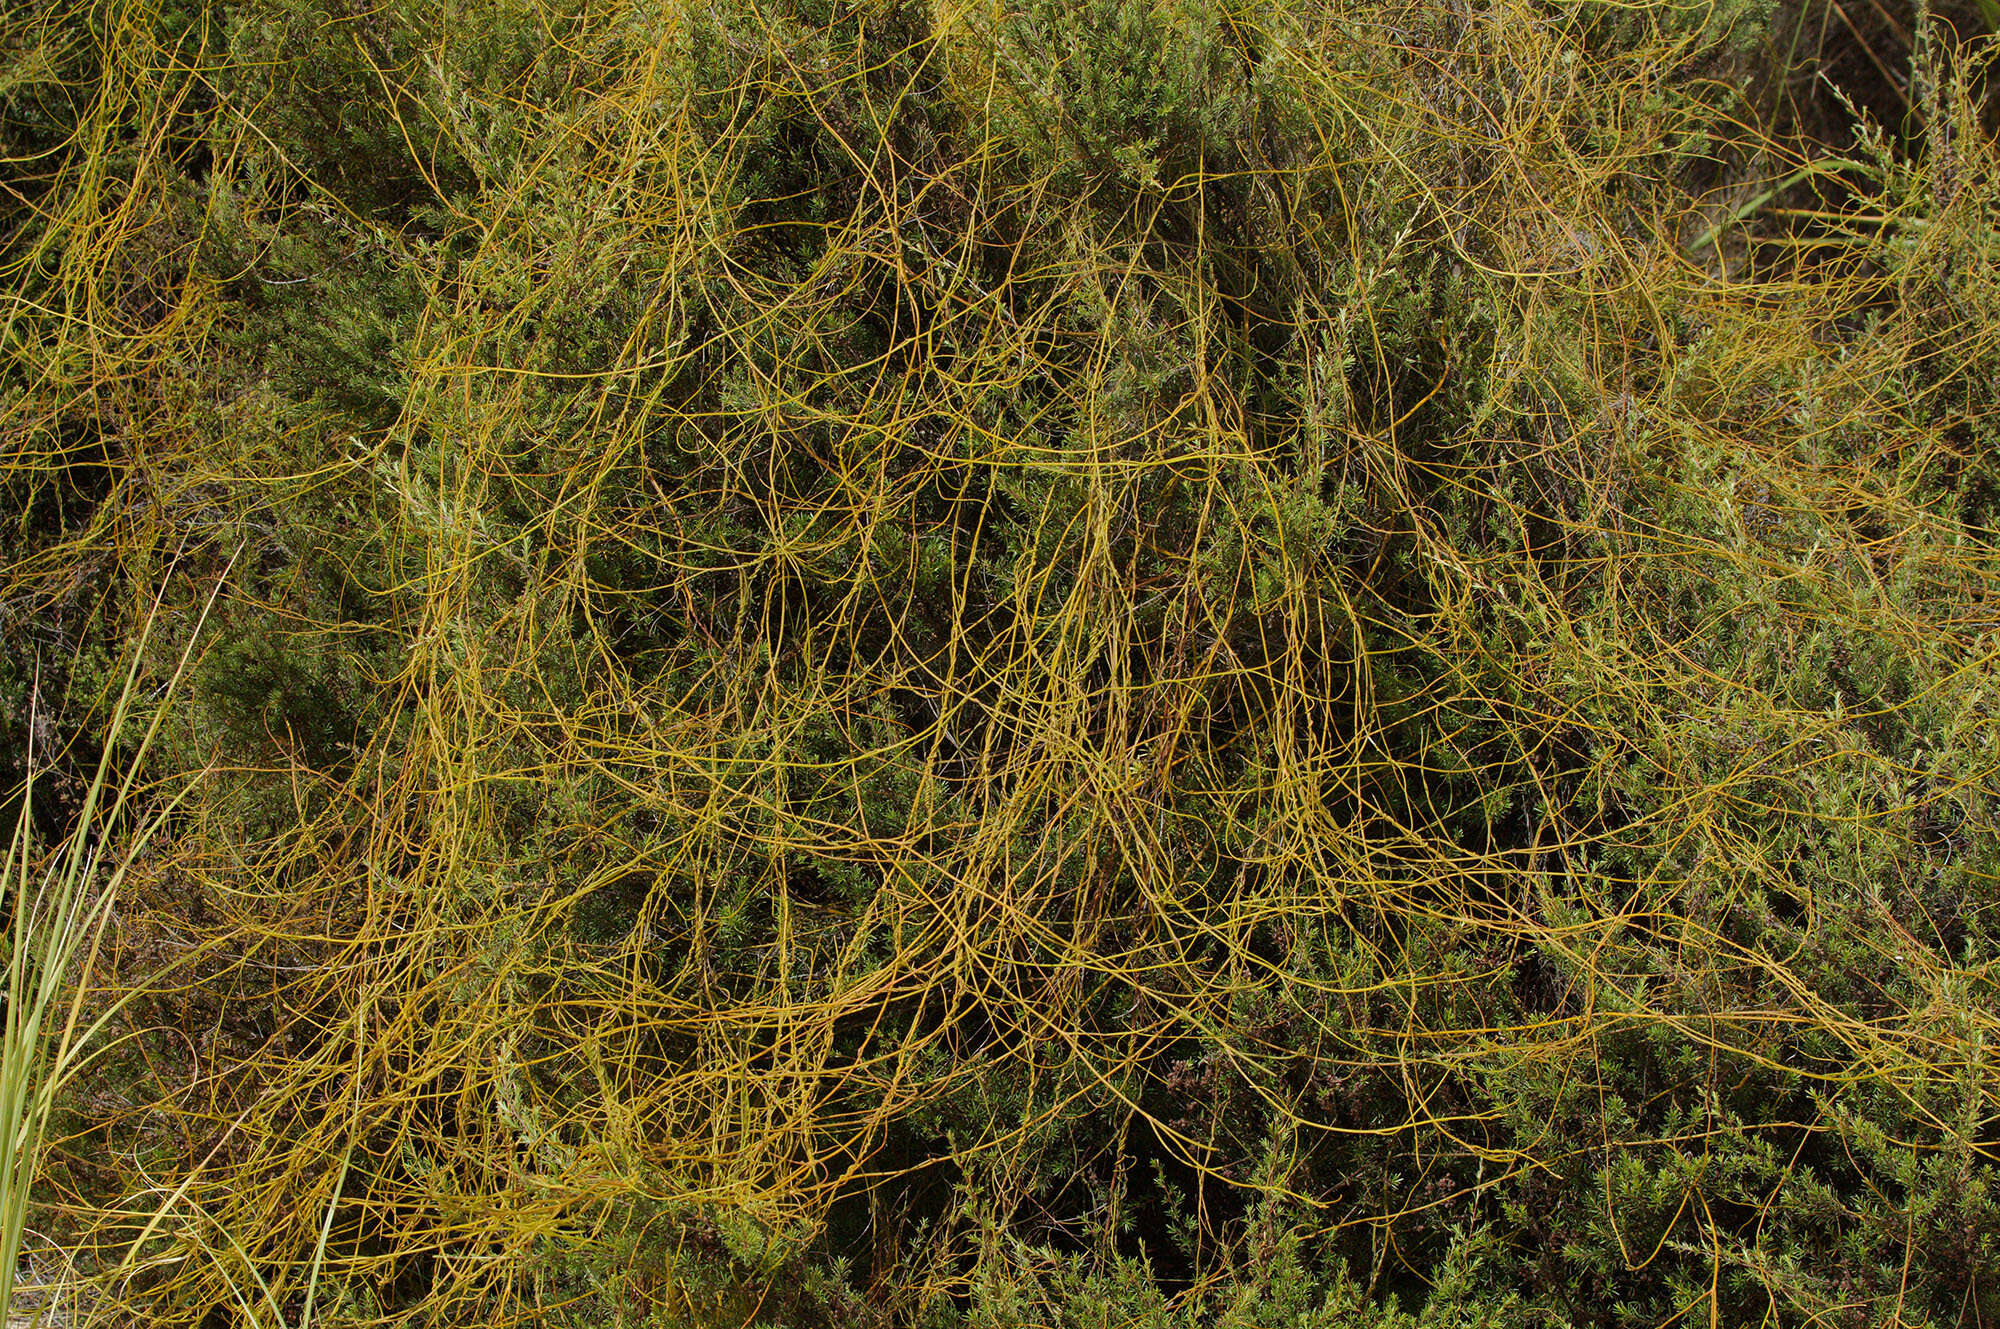 Image of Cassytha paniculata R. Br.